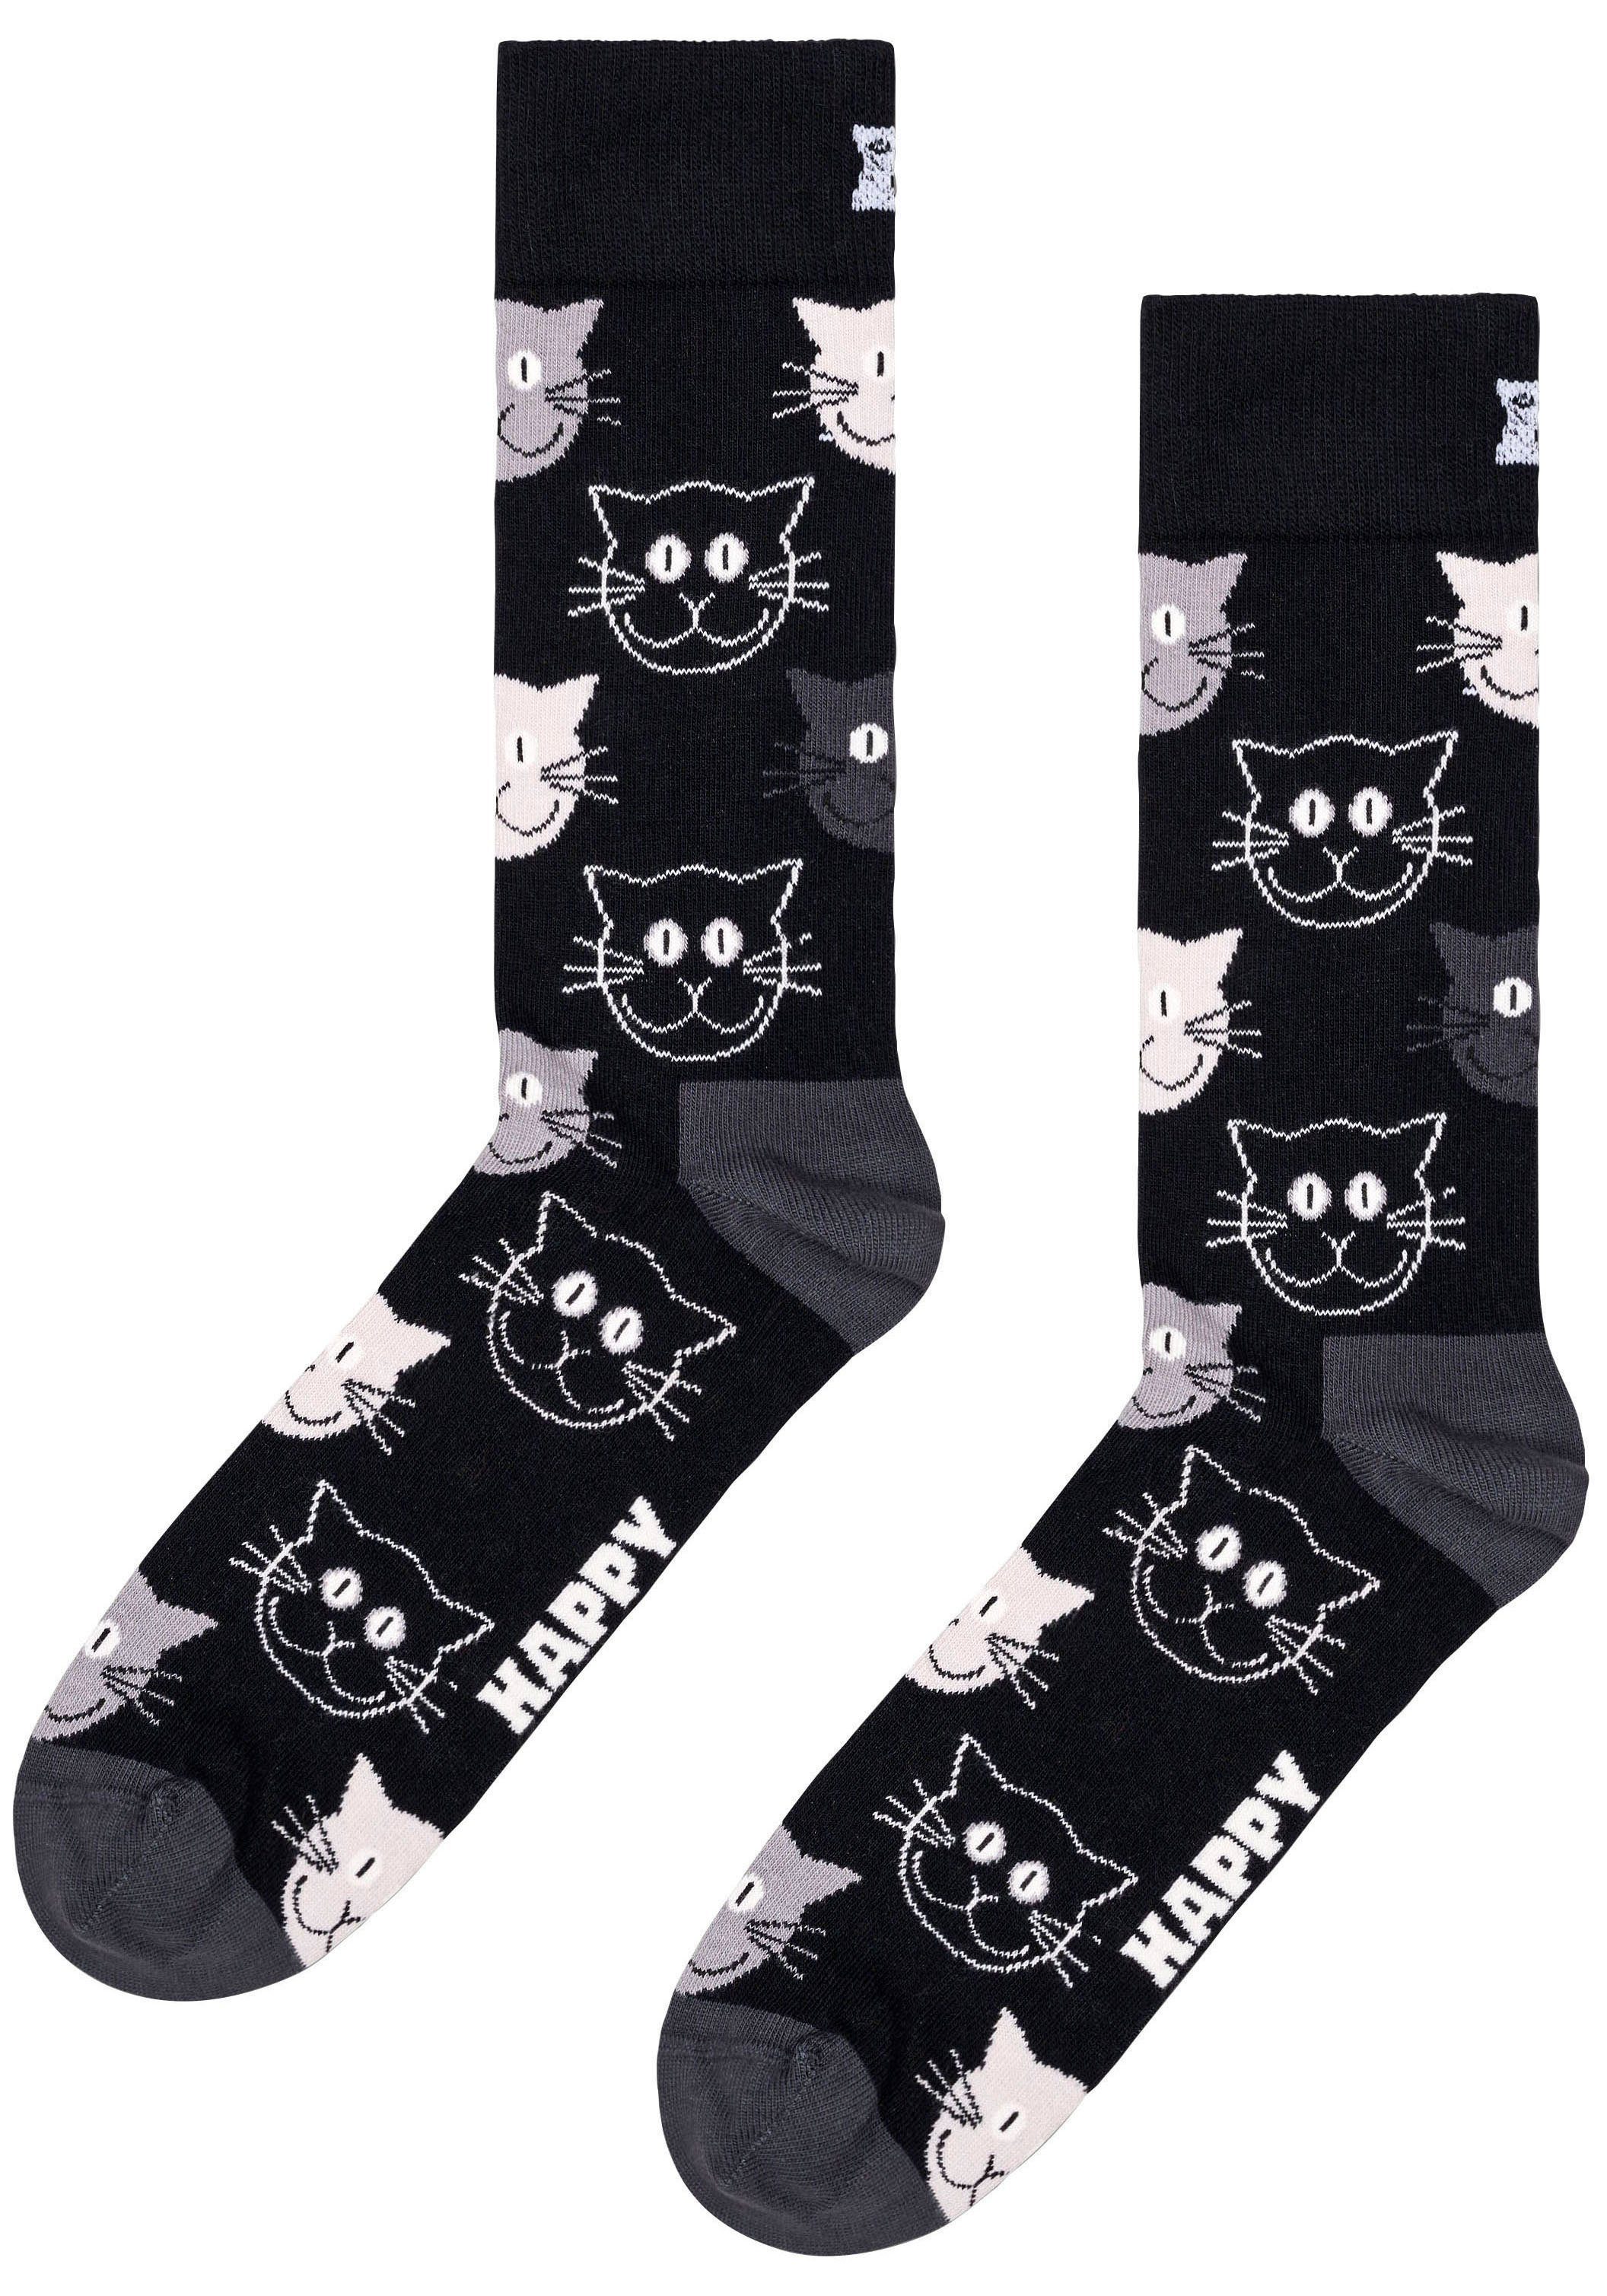 Happy Socks Socken Cat Mixed 3-Paar) Cat Socks Set Katzen-Motive Gift 2 (Packung, Mixed 3-Pack